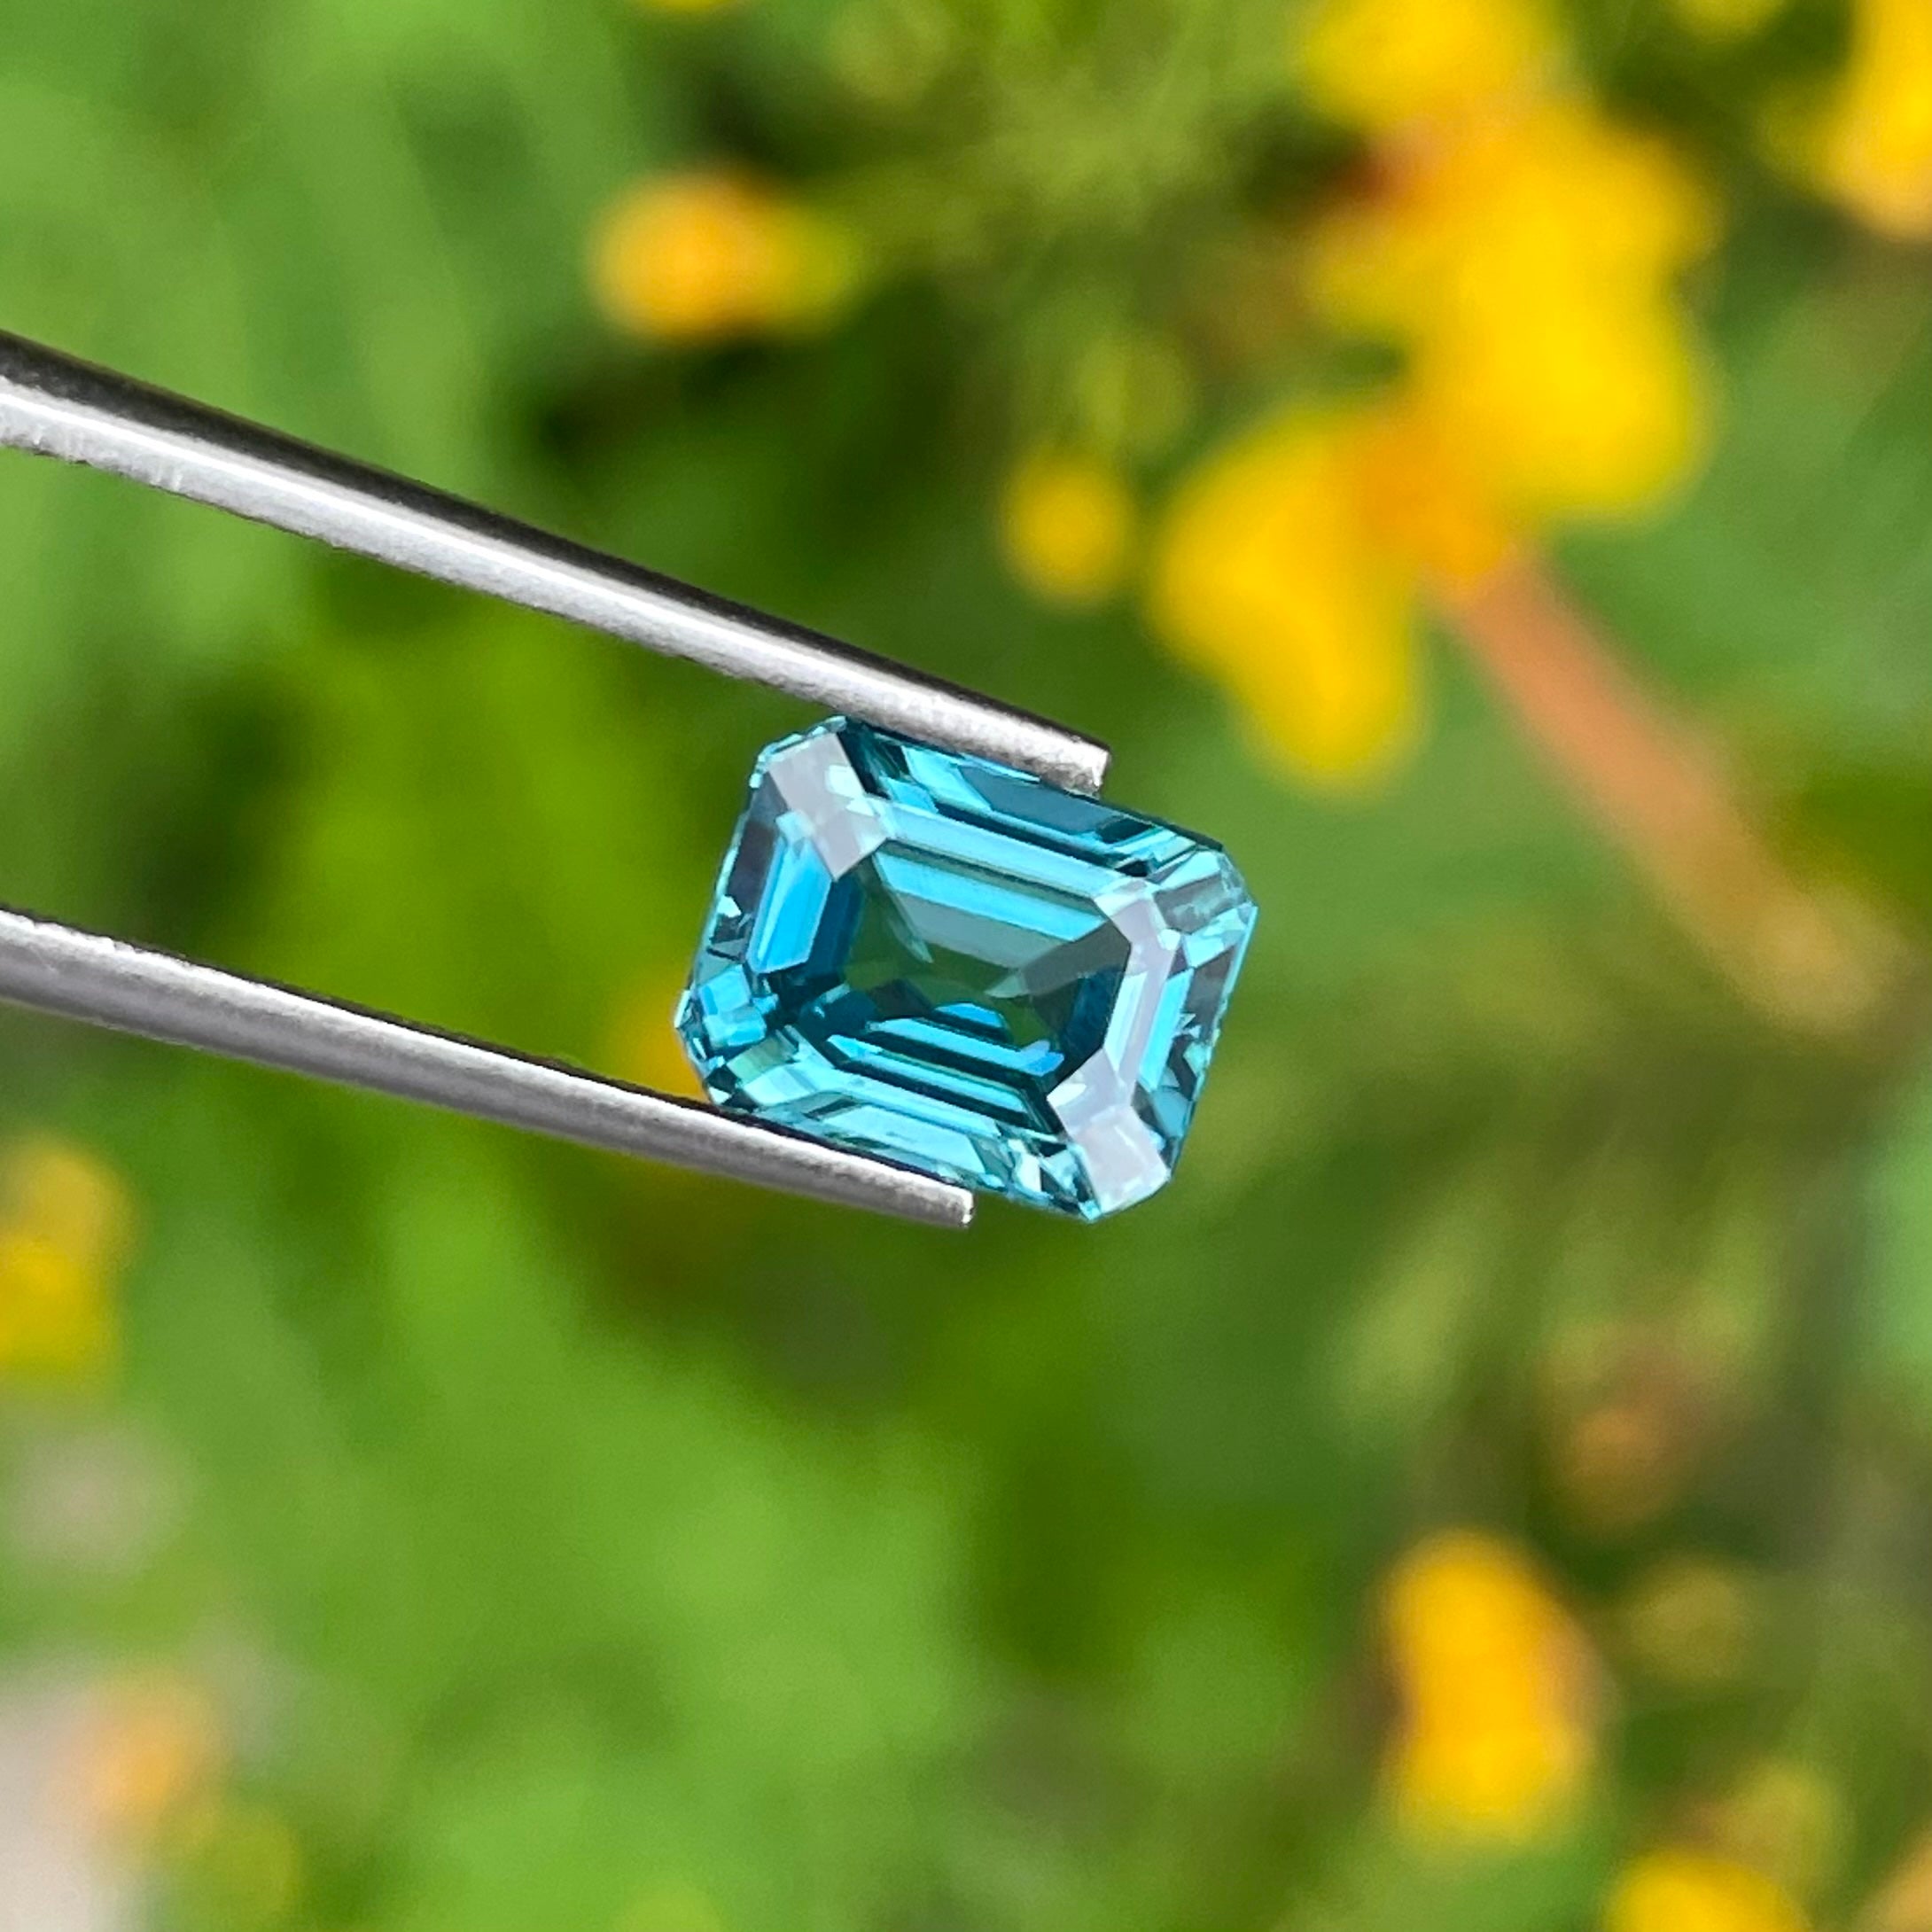 Organic Blue Zircon 3.05 carats Emerald Cut Natural Cambodian Gemstone